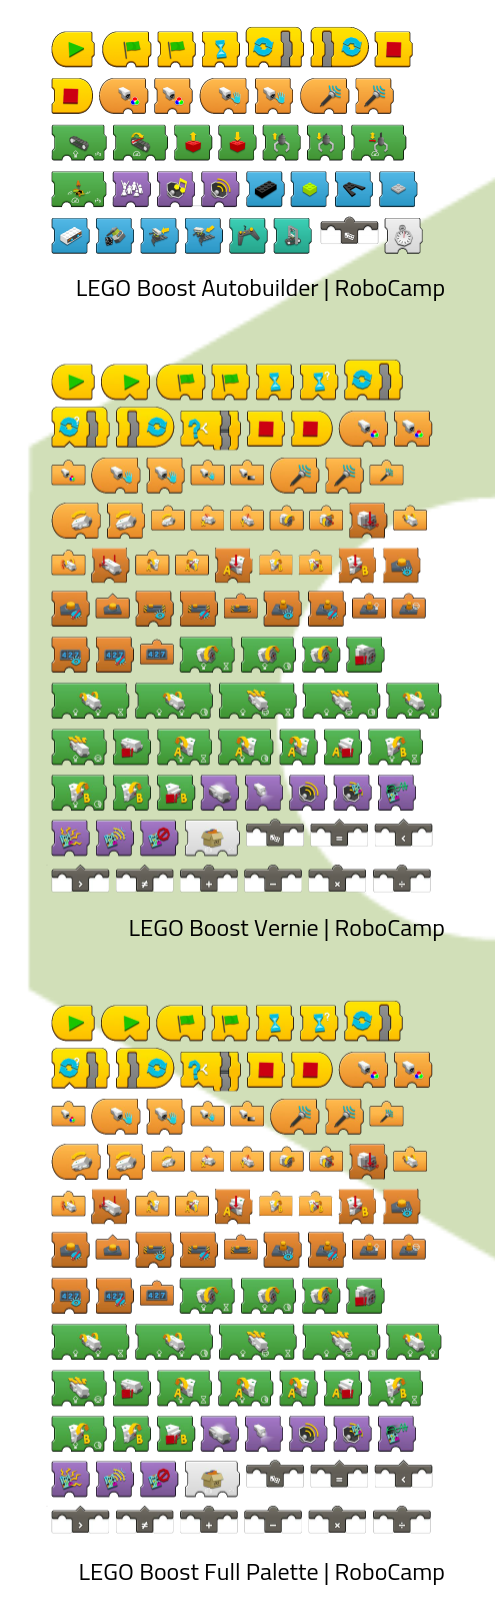 LEGO Boost bloczki programowania